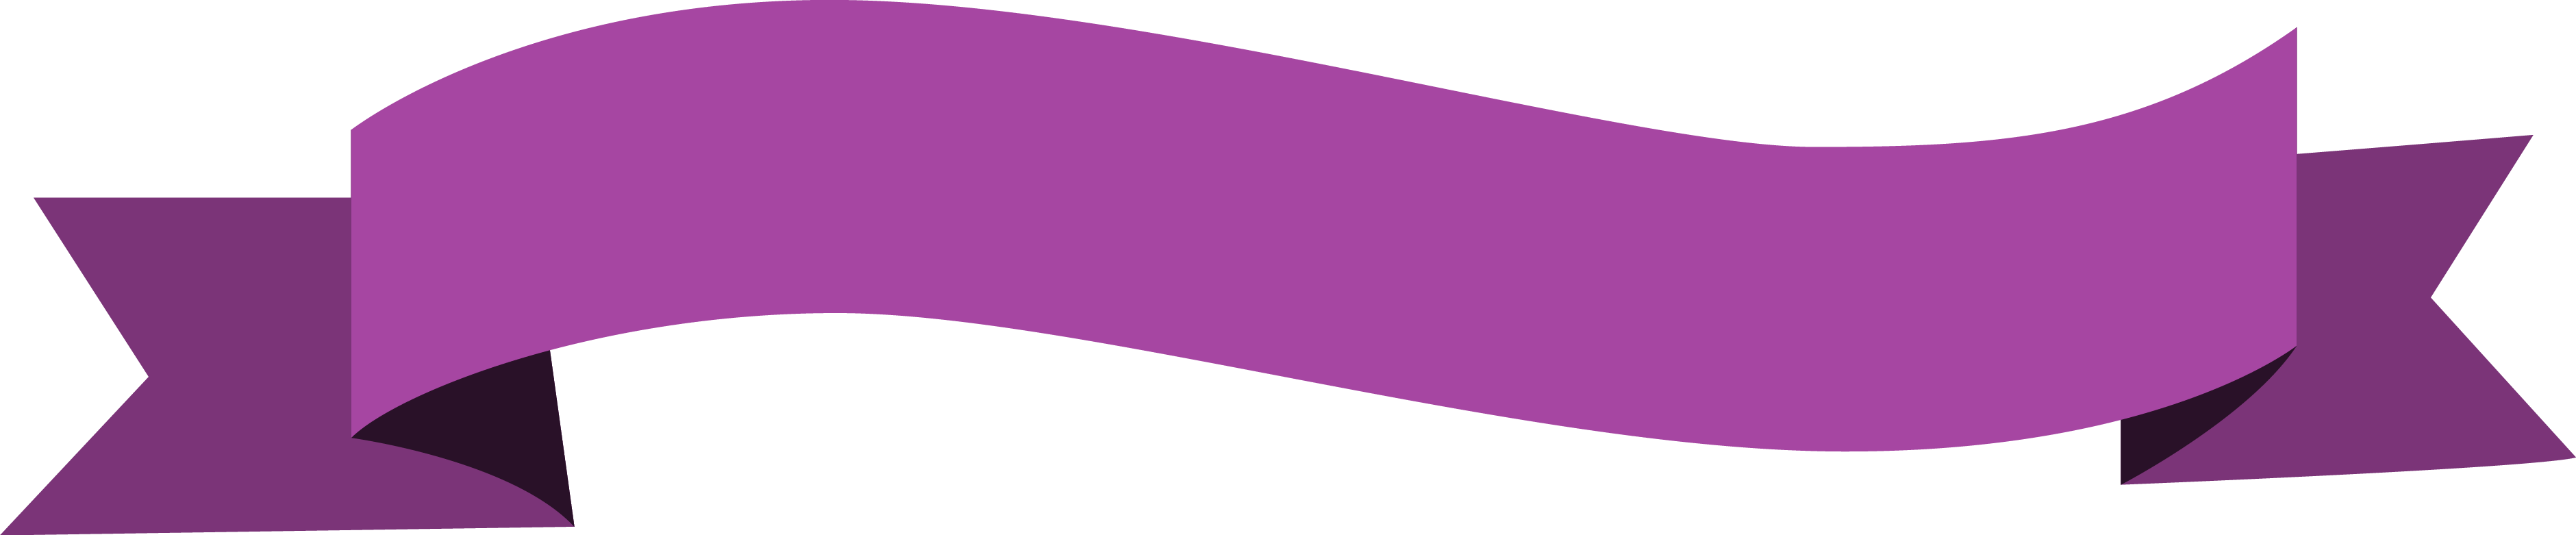 Pink Web Angle Minecraft Banner Ribbon PNG Image